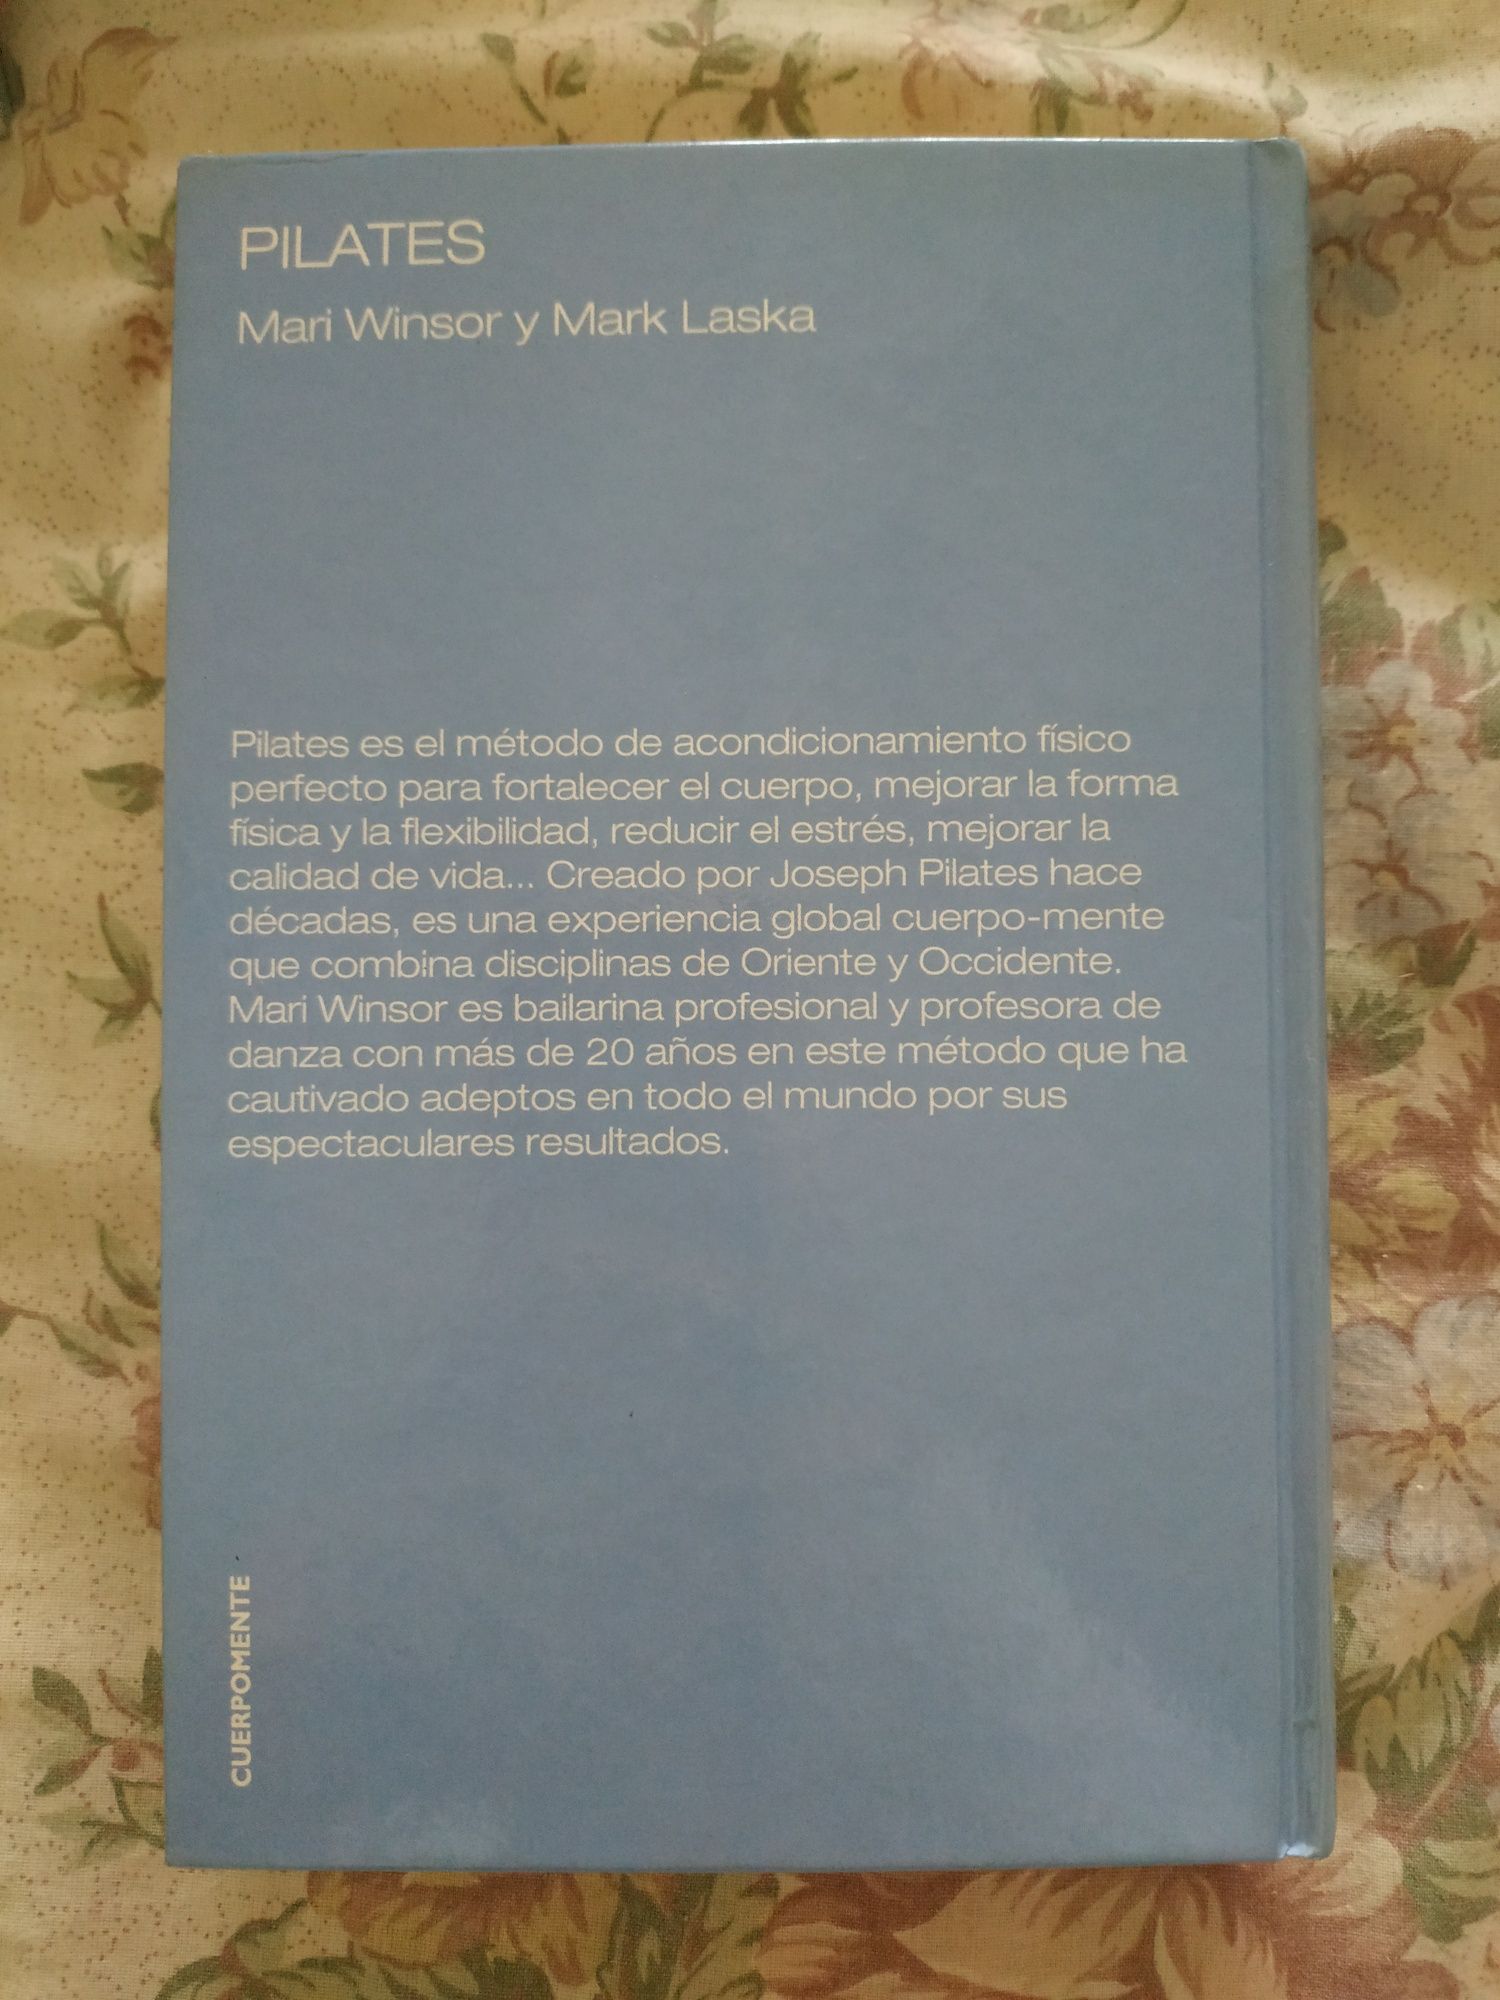 Livro Pilates de Mari Windsor e Mark Laska